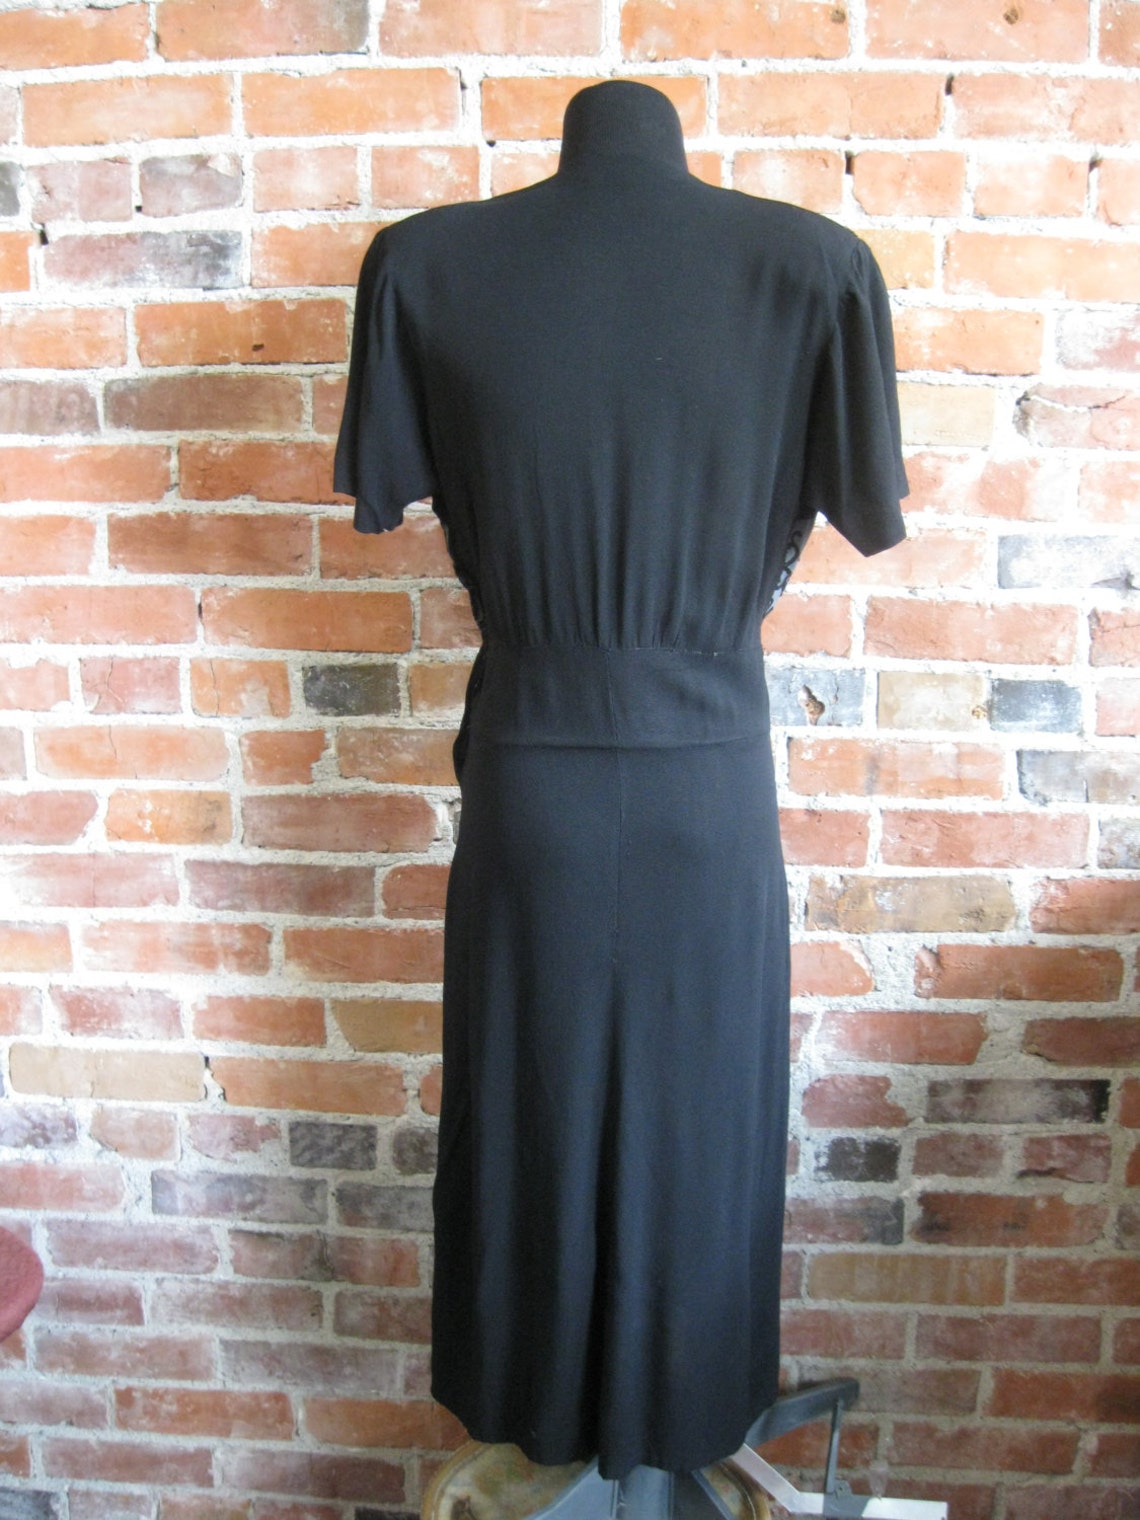 Vintage 1940s Black Rayon Crepe Swing Dress // 40s WWII Era - Etsy